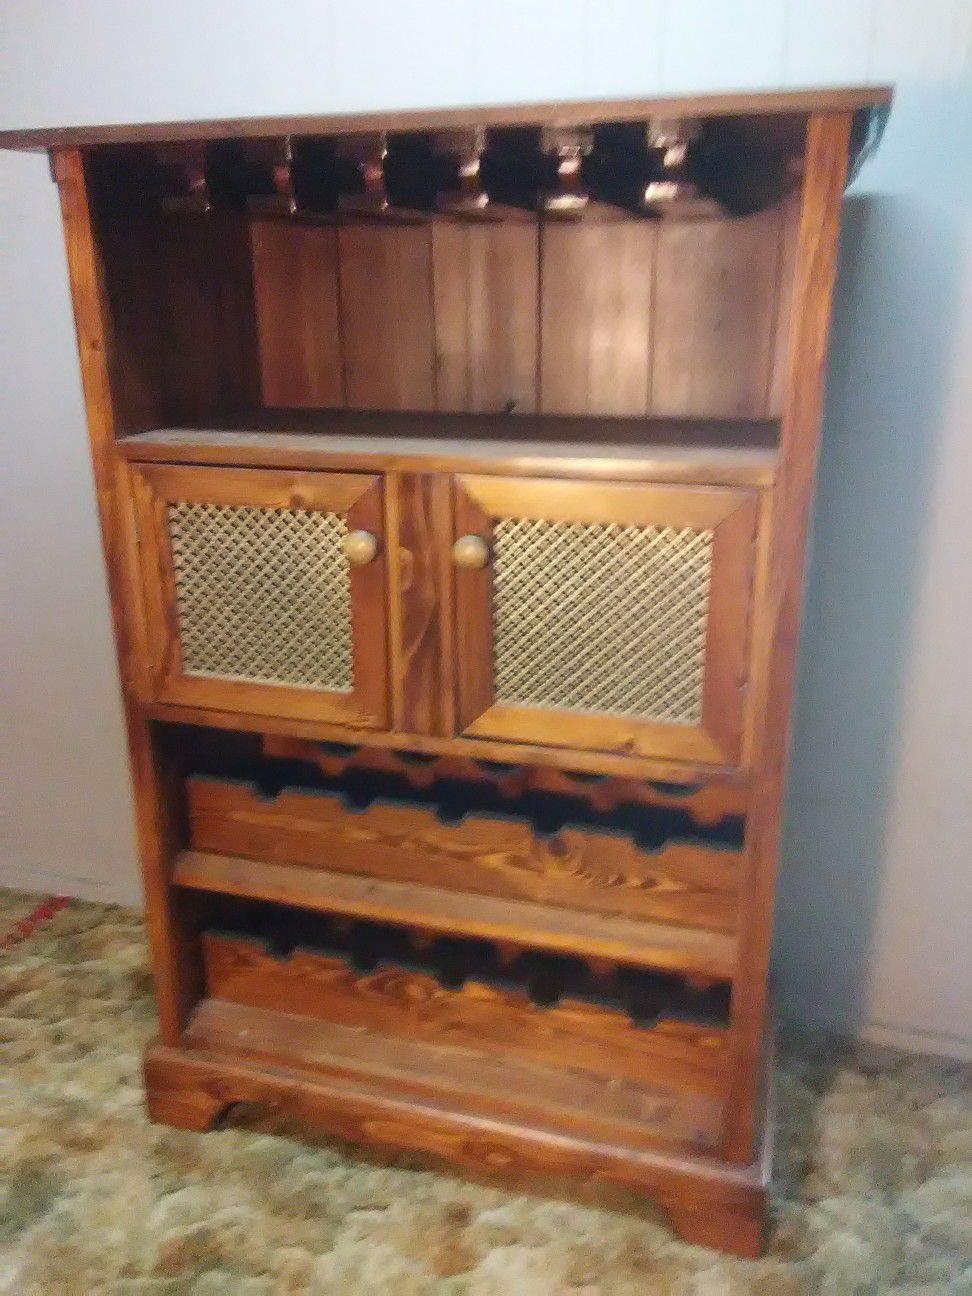 Wine cupboard